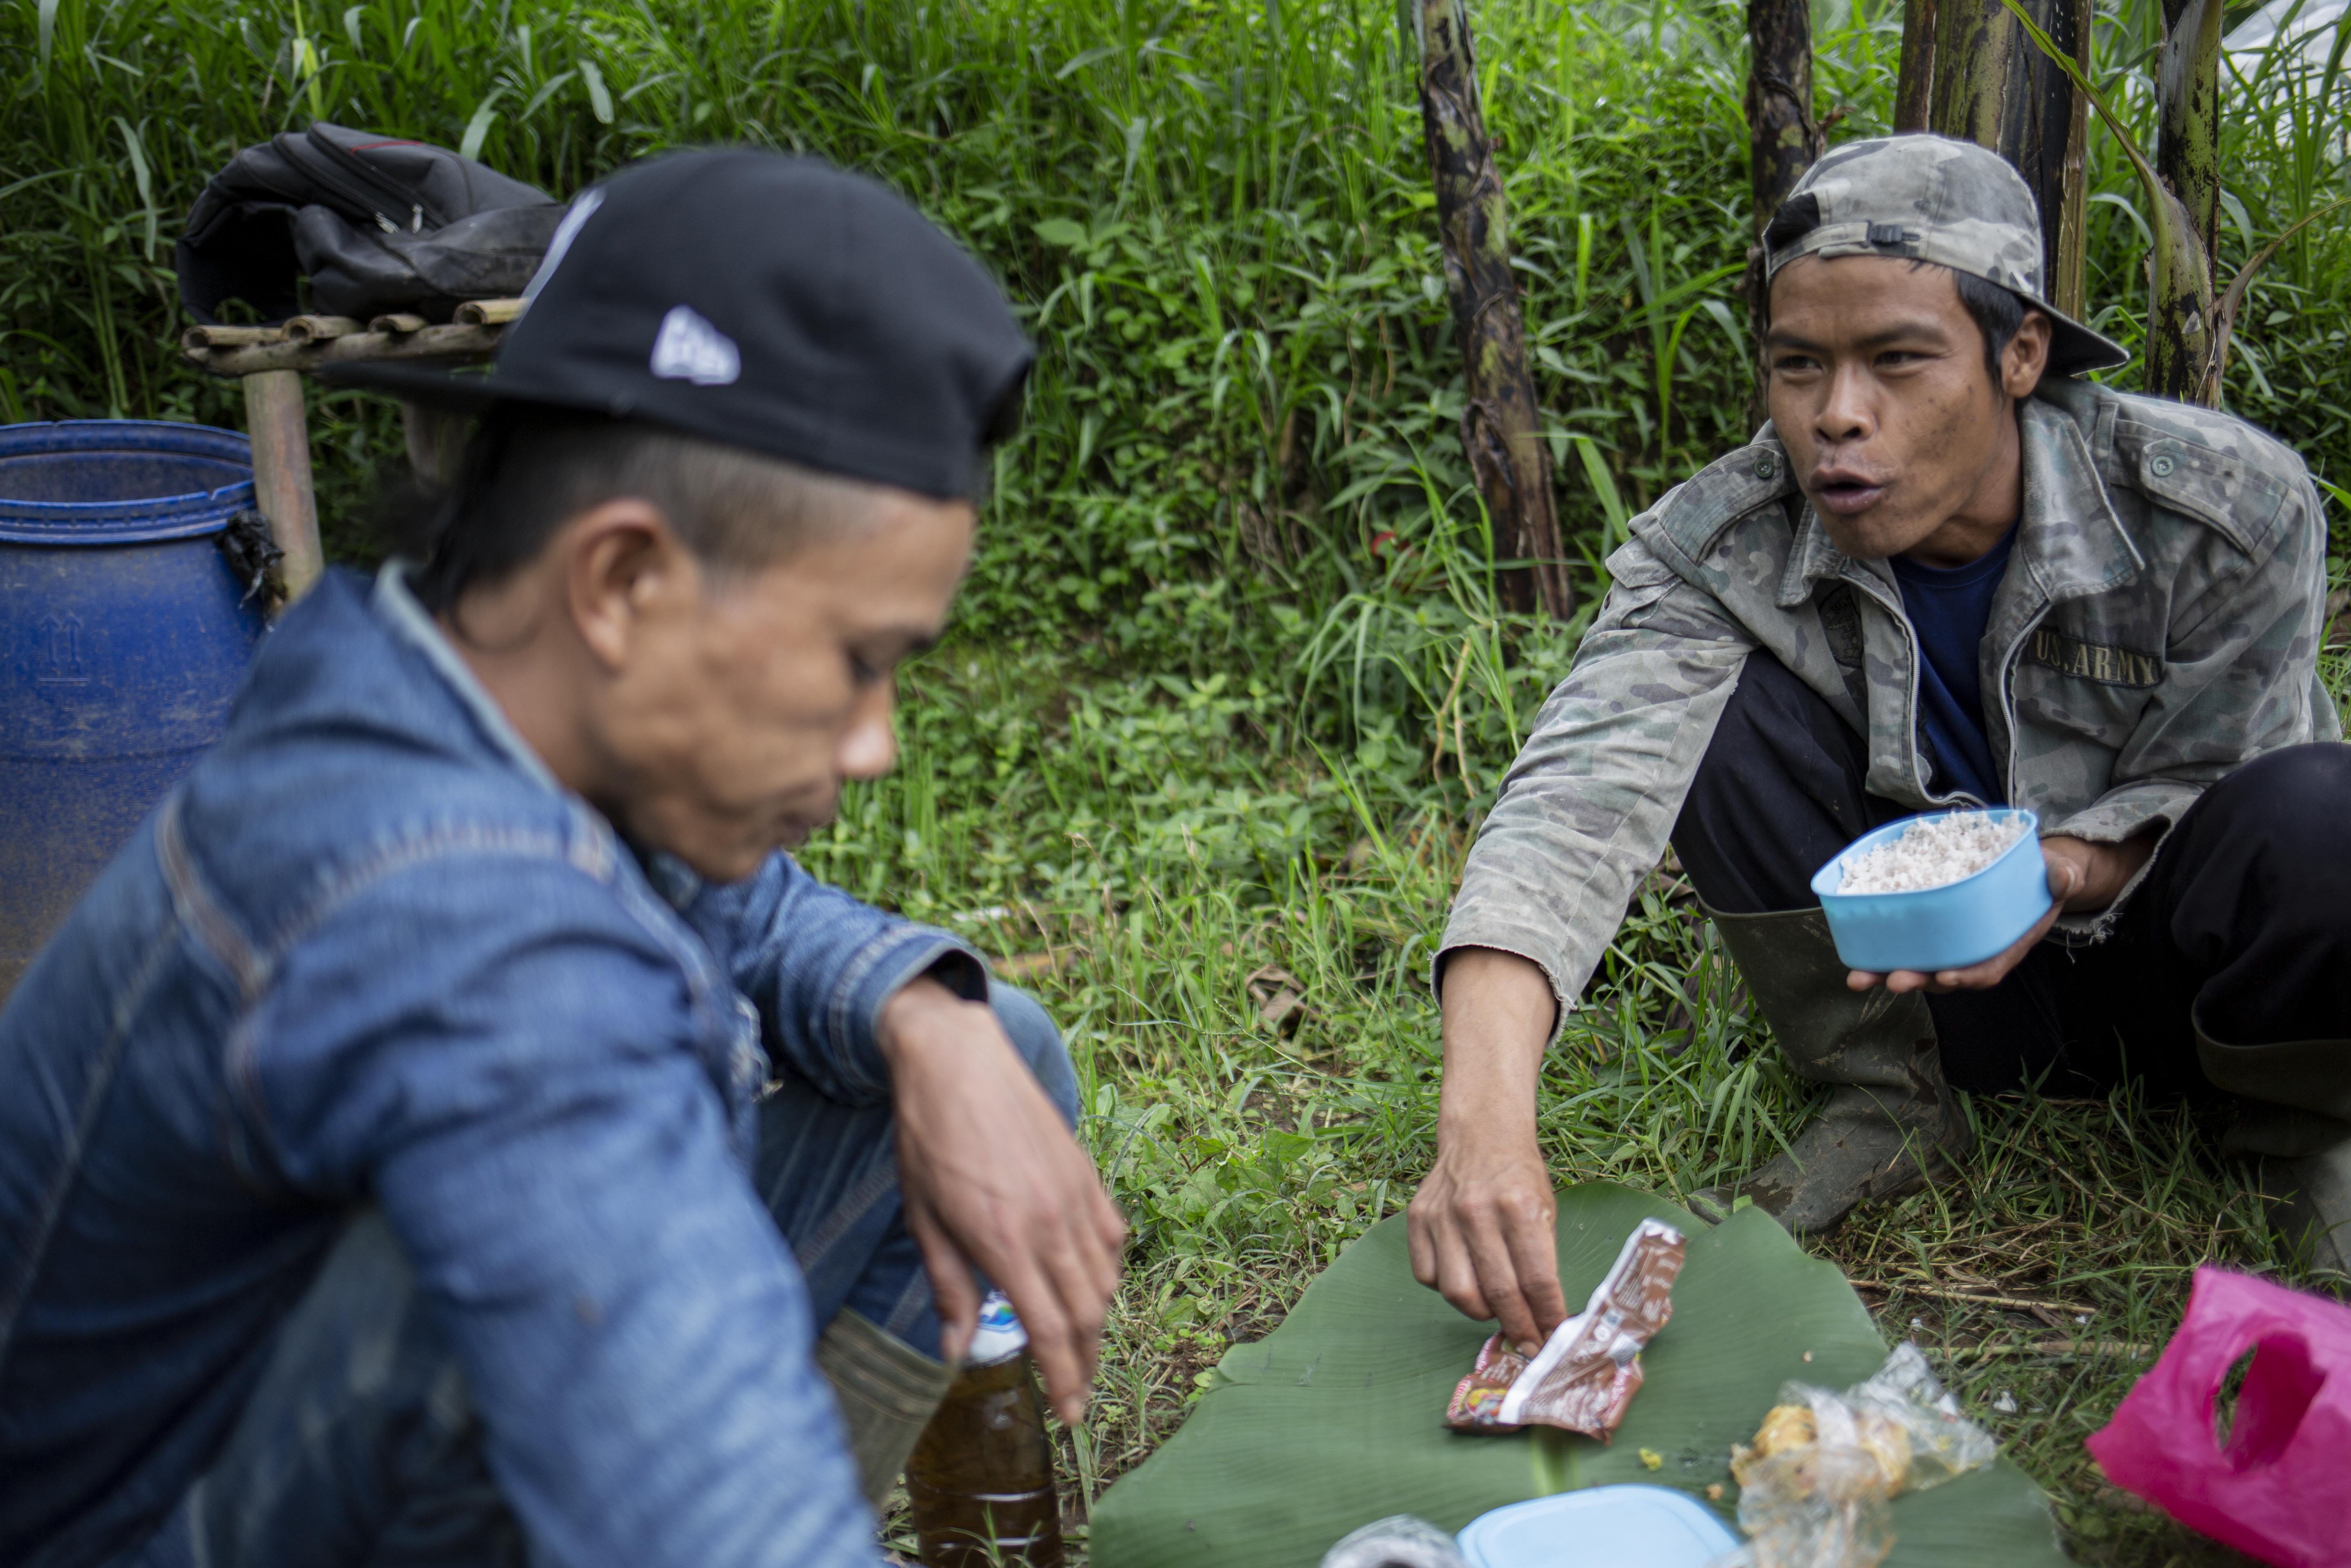 Ubet dan Yayat menyantap makanan yang dibawa dari rumah di tengah perjalanan berburu madu hutan di Tengah Hutan Palalngon, Minggu (1/3/2020).